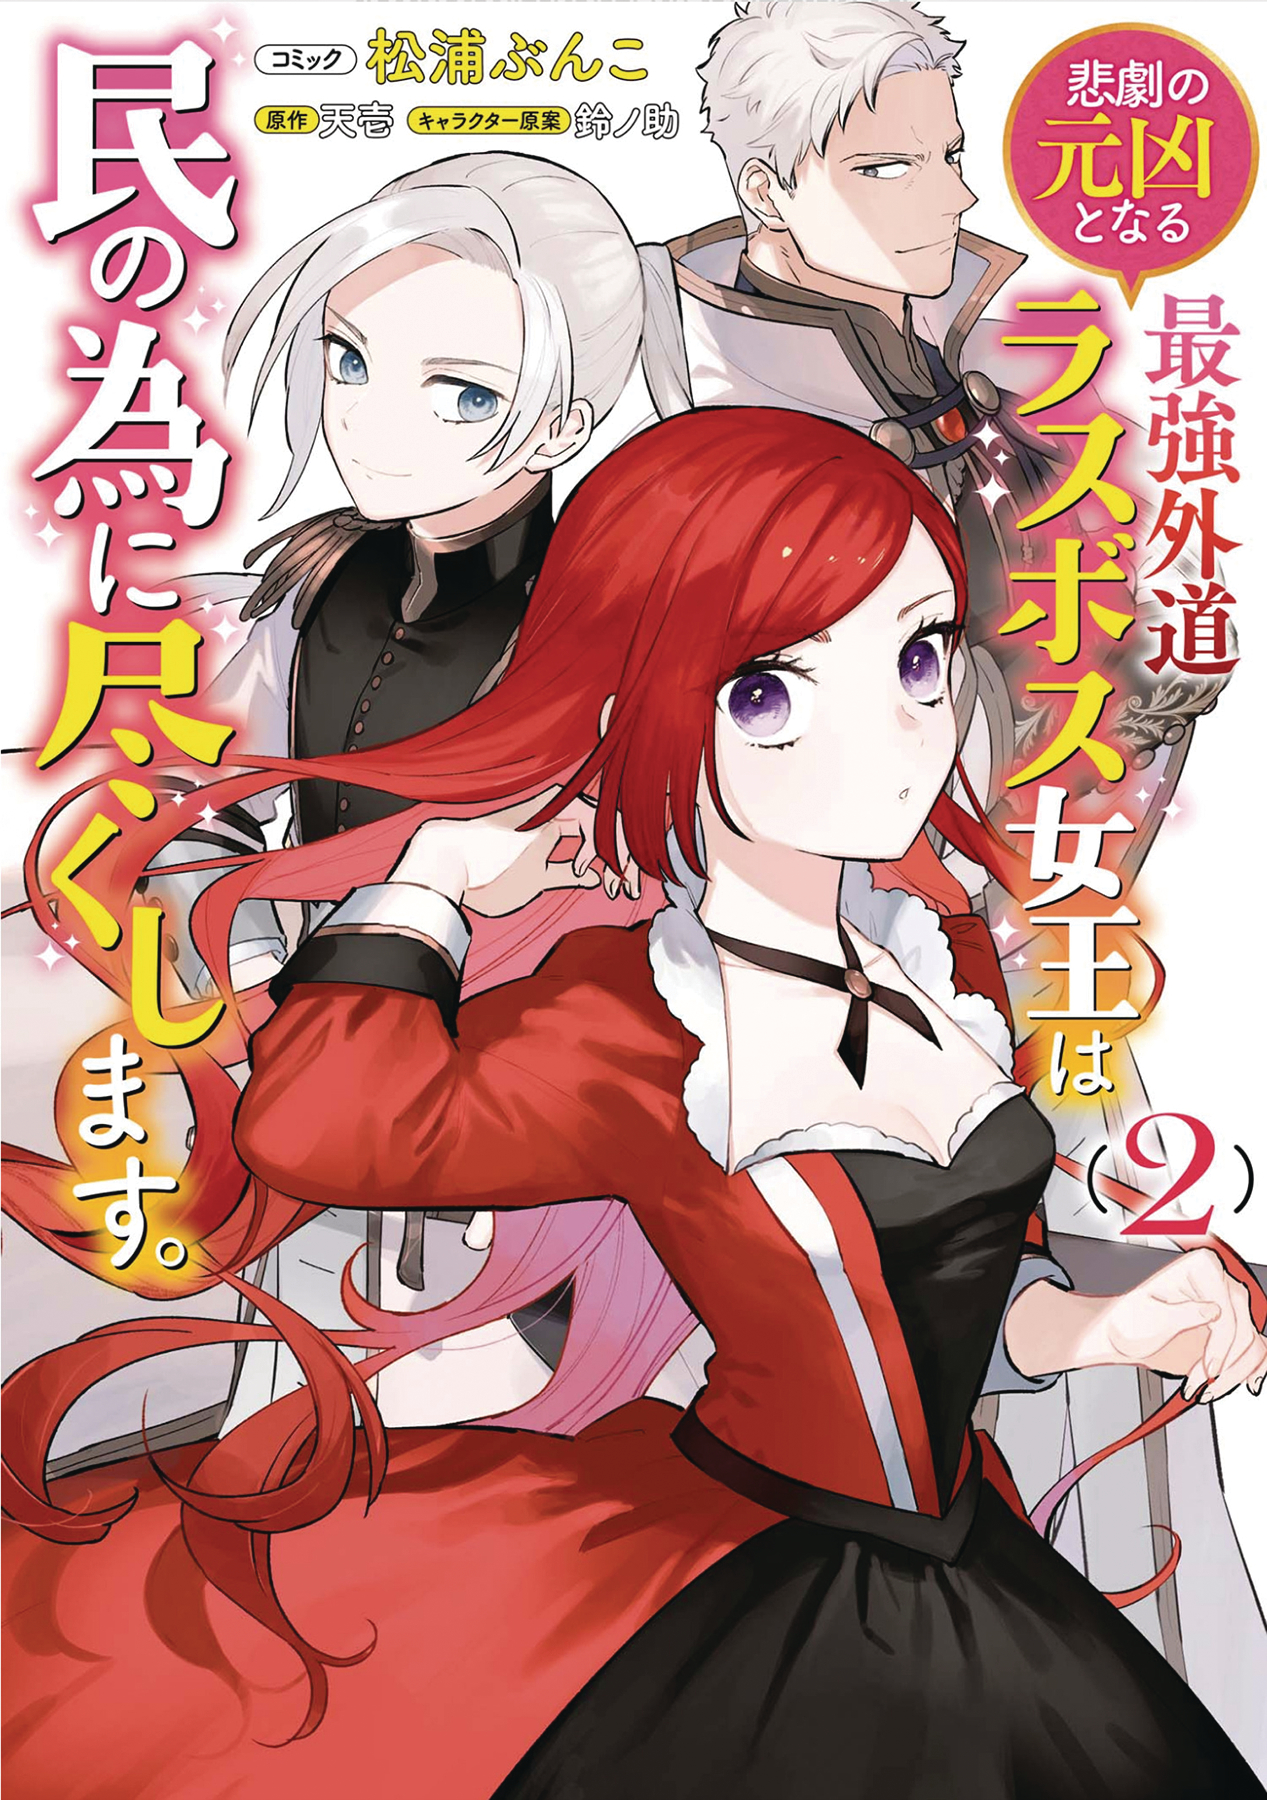 Most Heretical Last Boss Queen Manga Volume 2